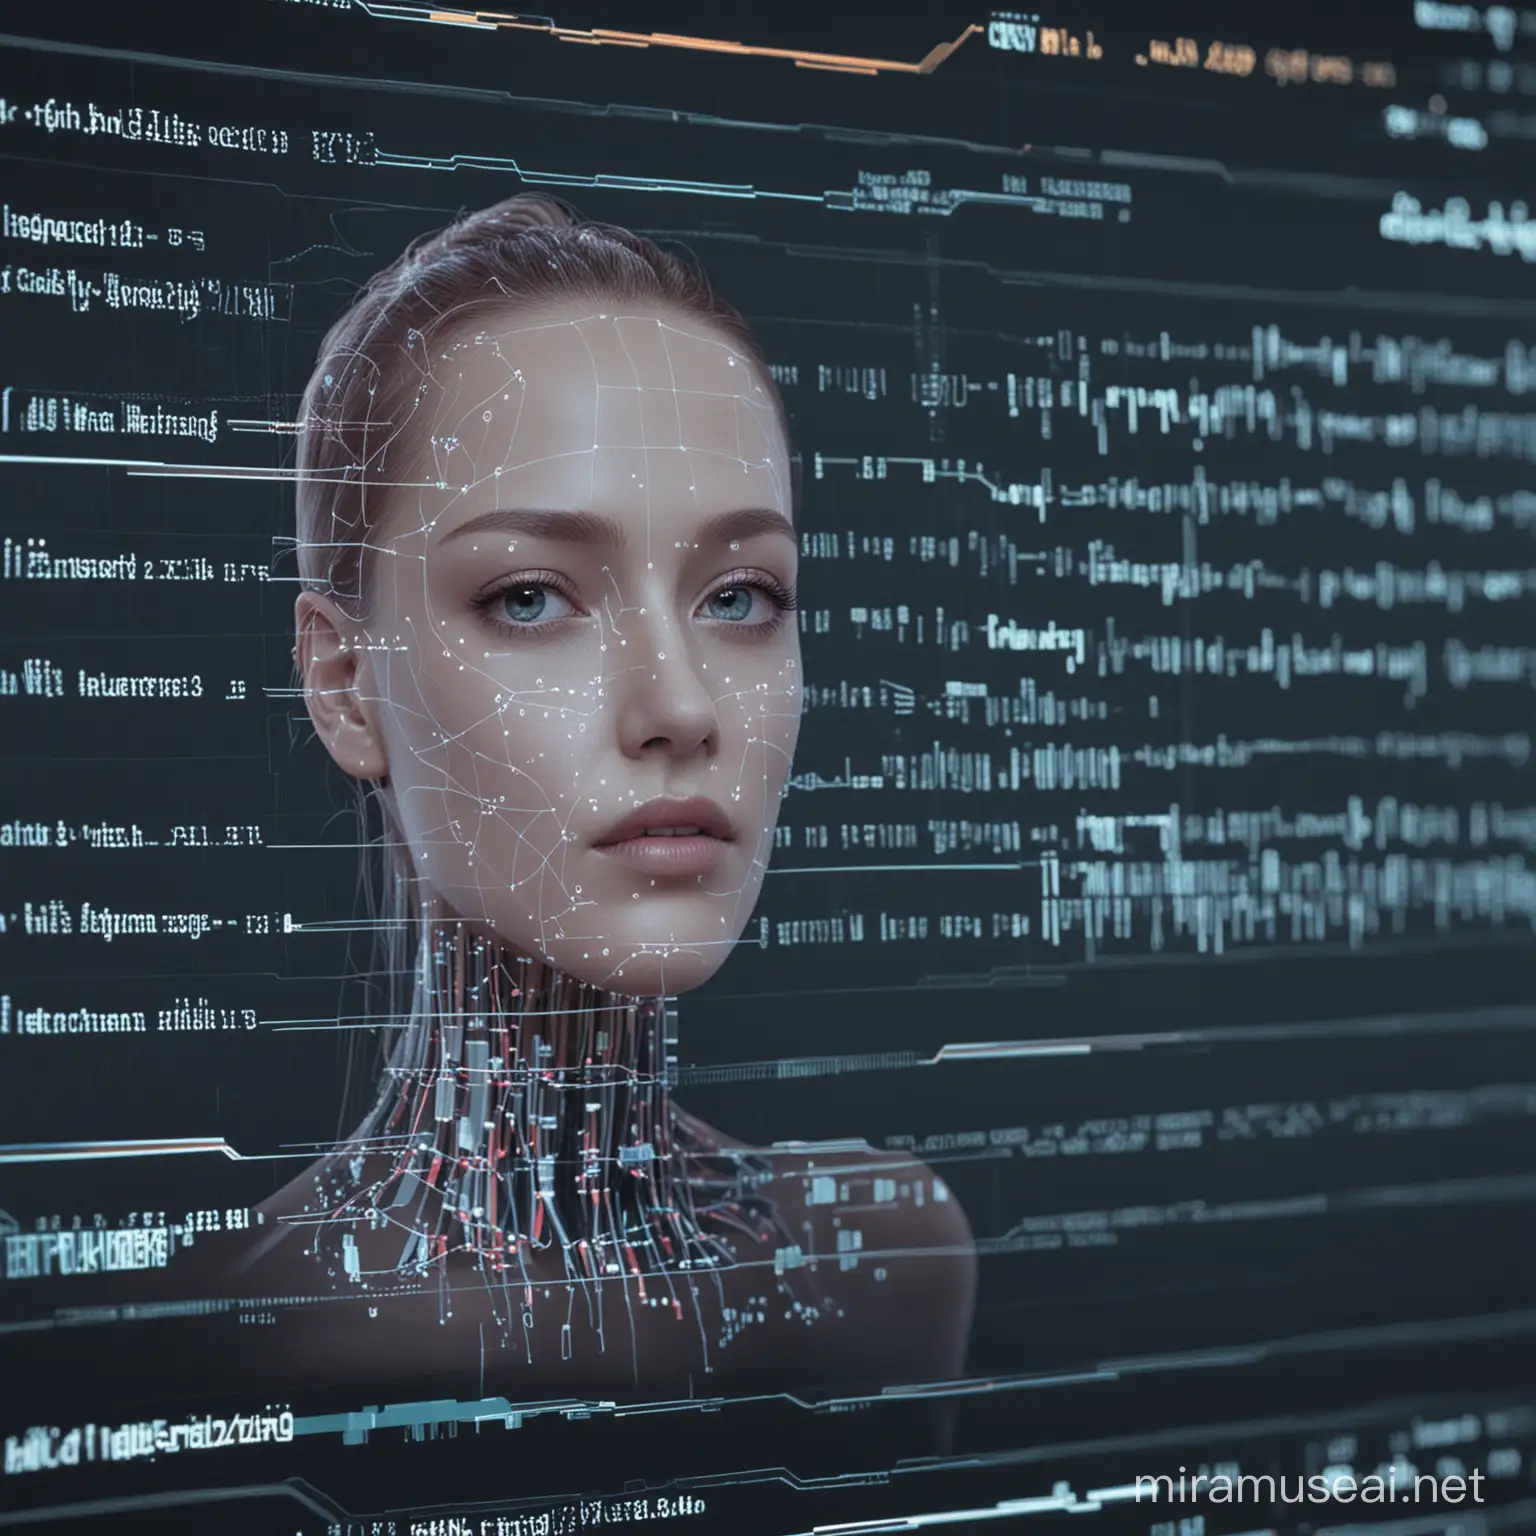 screen showing artificial intelligence data

